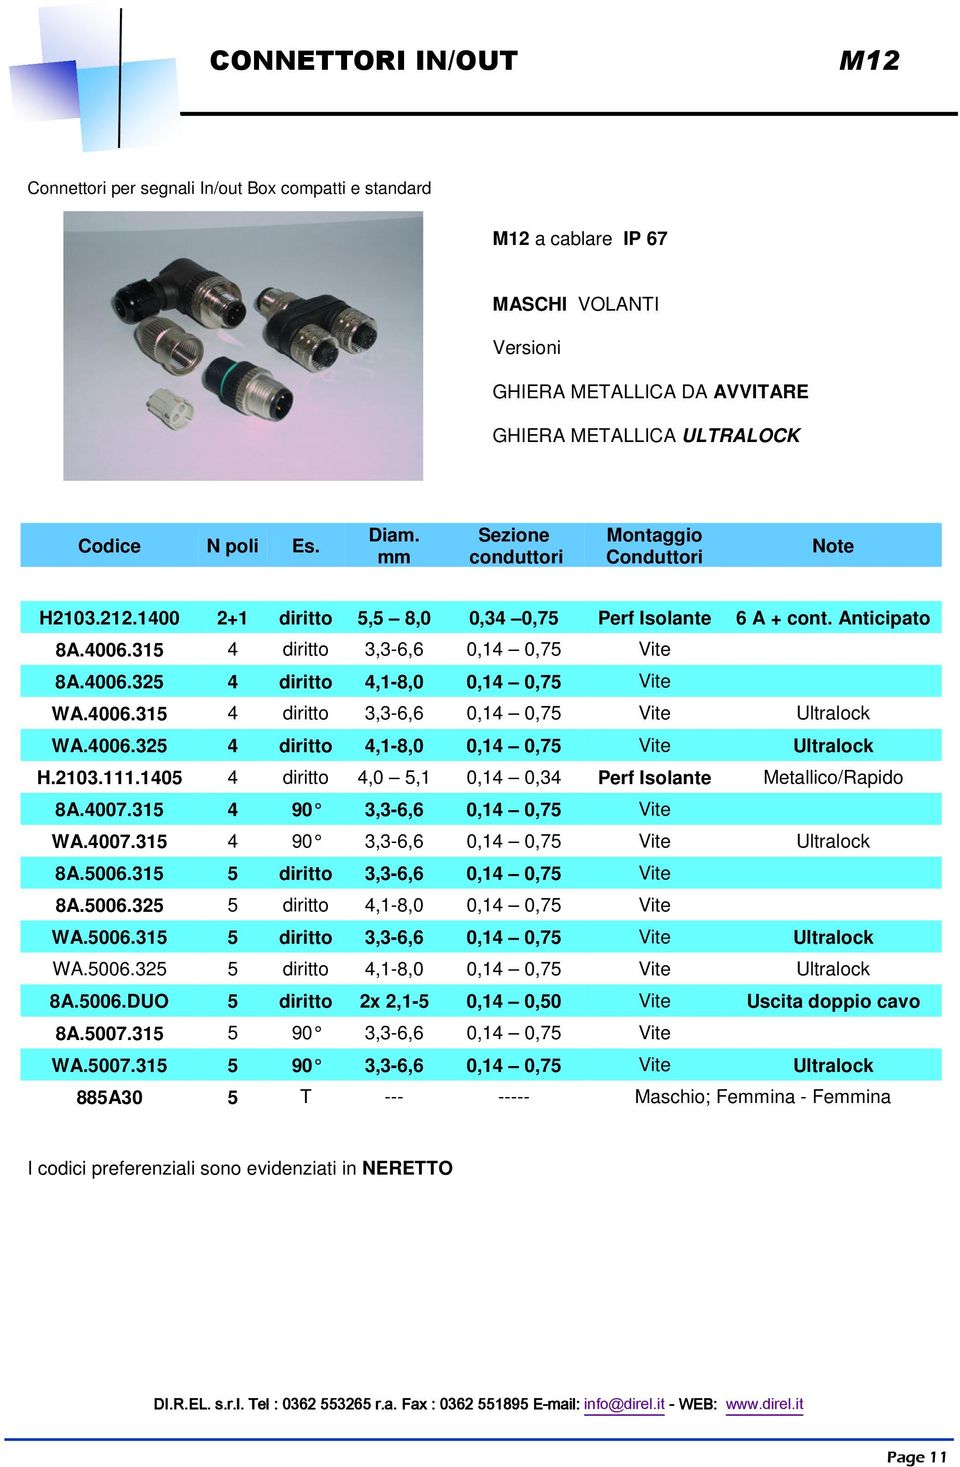 4006.315 4 diritto 3,3-6,6 0,14 0,75 Vite Ultralock WA.4006.325 4 diritto 4,1-8,0 0,14 0,75 Vite Ultralock H.2103.111.1405 4 diritto 4,0 5,1 0,14 0,34 Perf Isolante Metallico/Rapido 8A.4007.